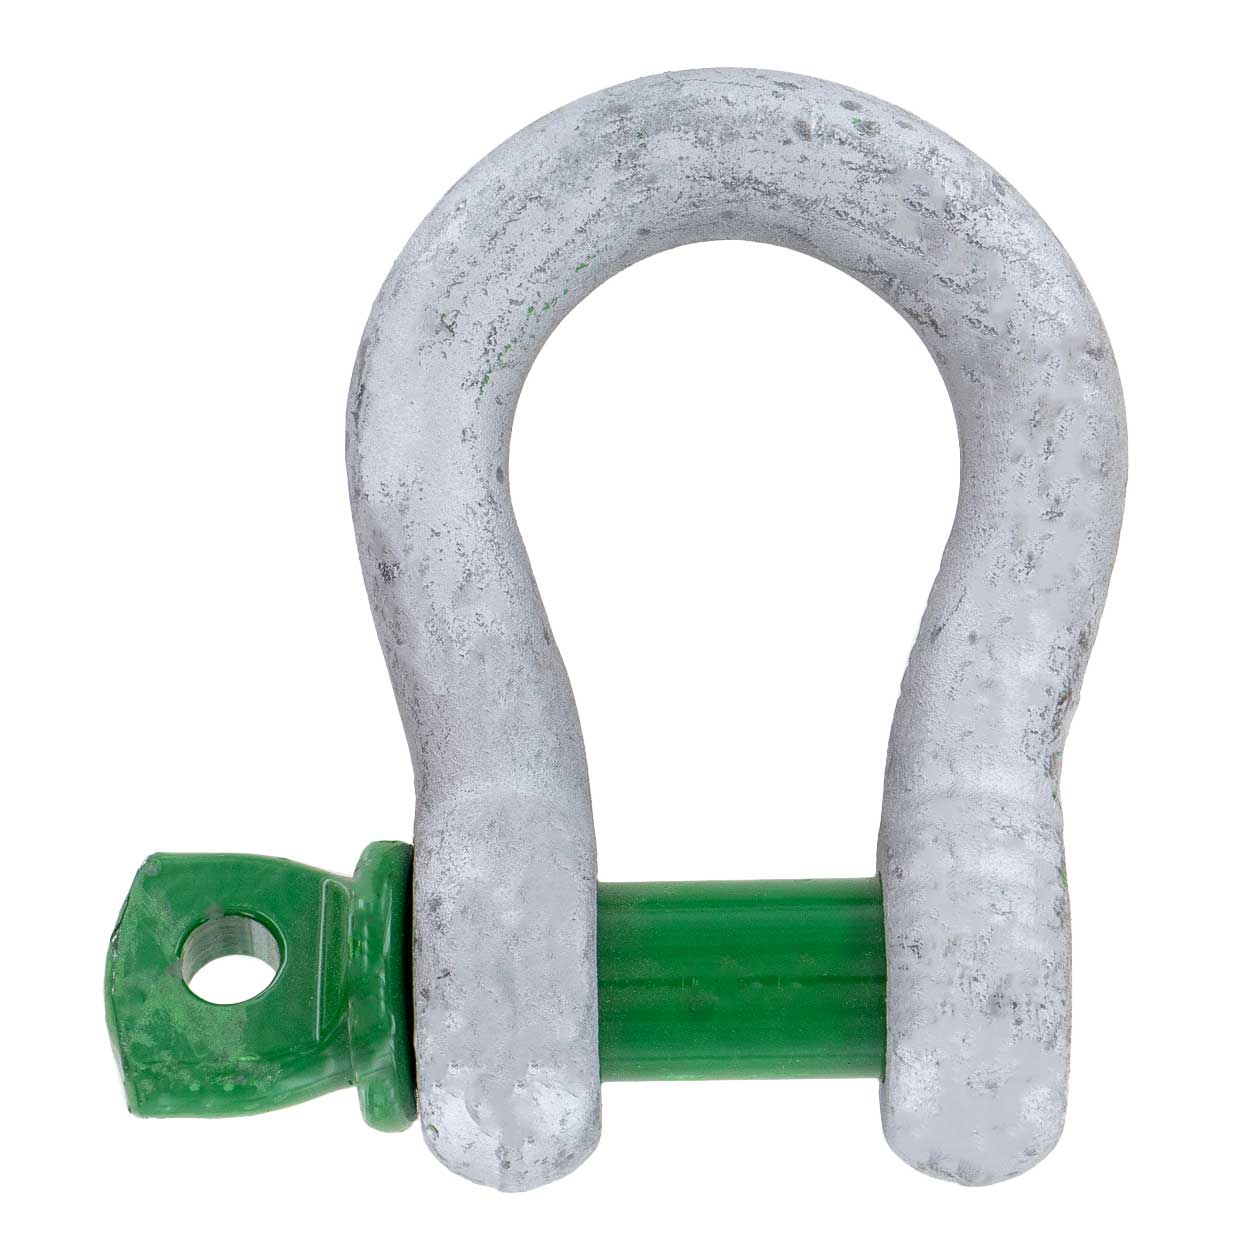 7/16" Van Beest Green Pin® Screw Pin Anchor Shackle | G-4161 - 1.5 Ton rear view